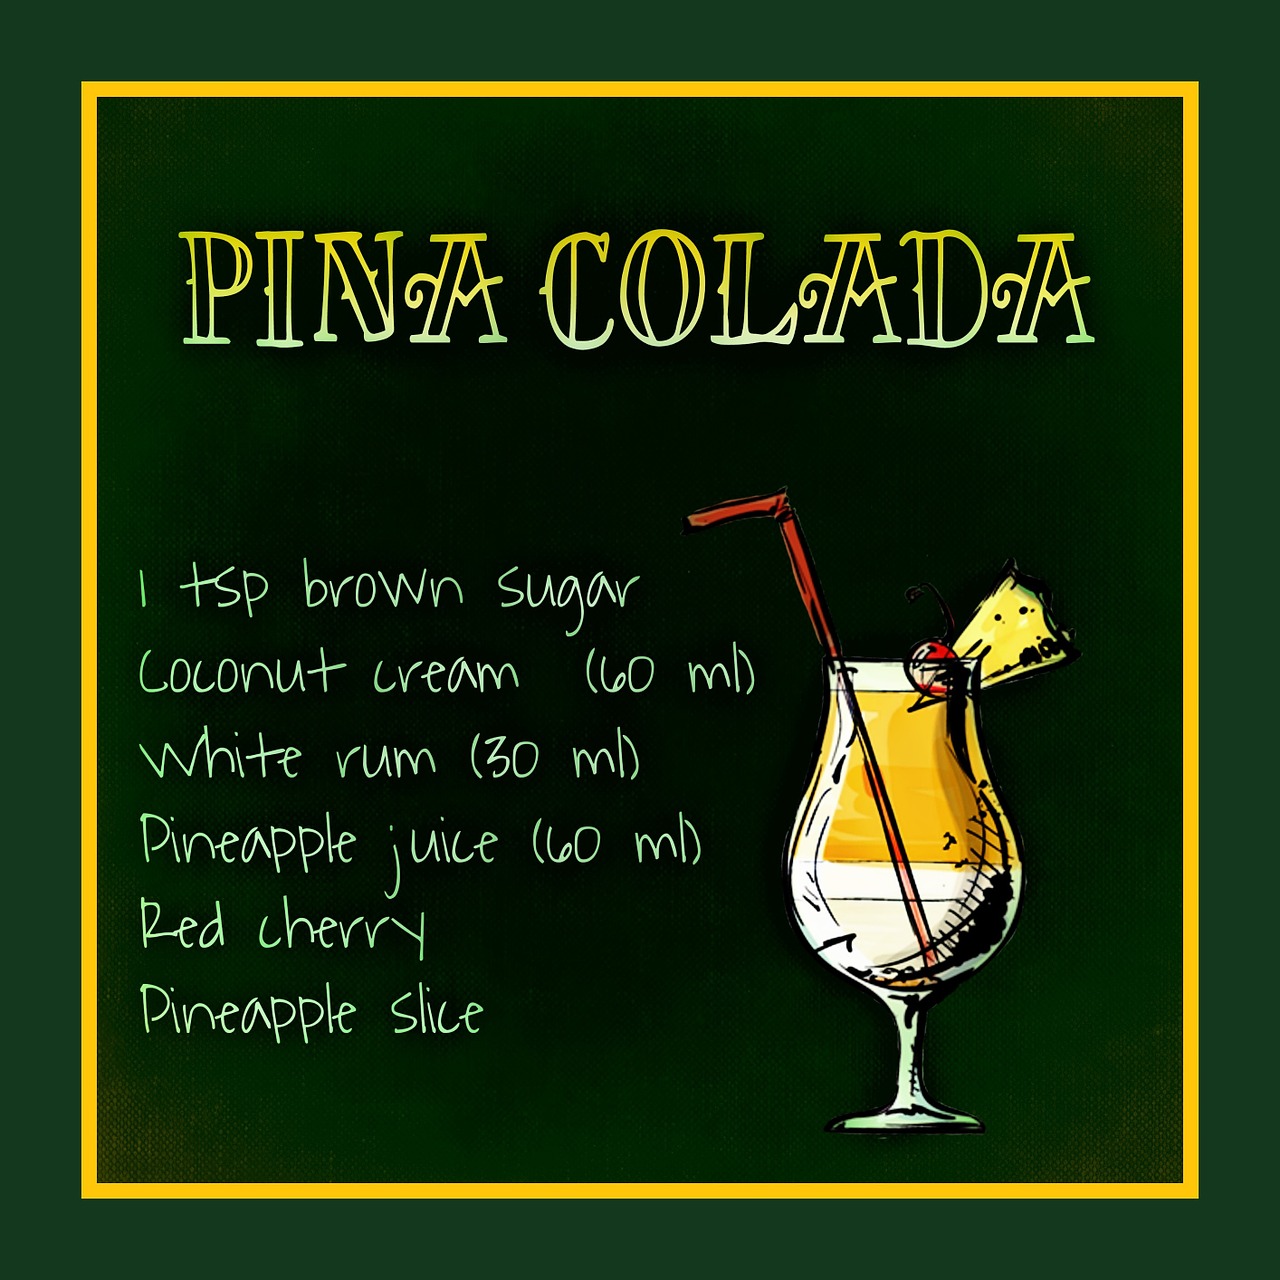 pina colada cocktail drink free photo